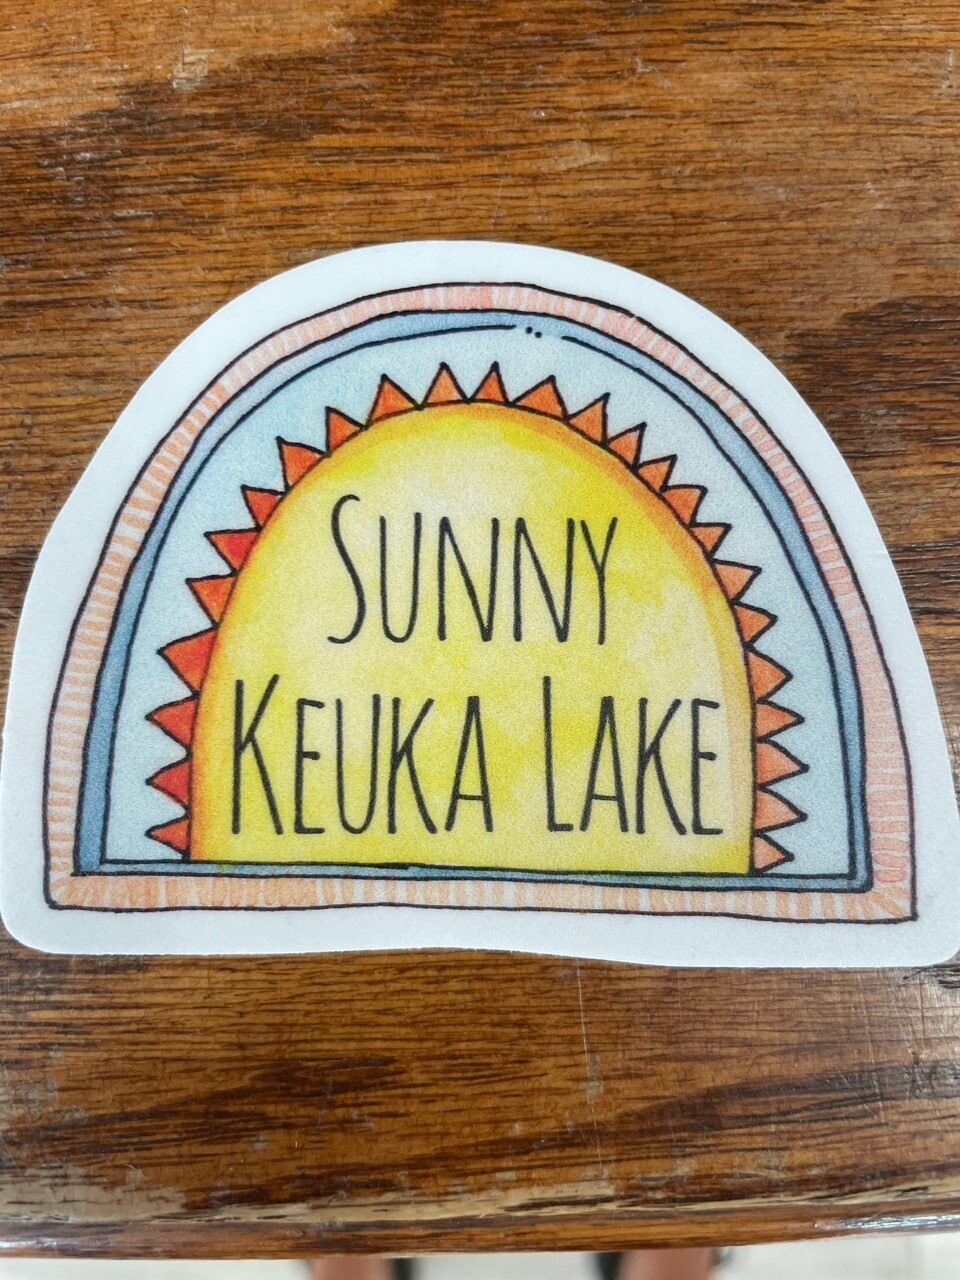 Sunny Keuka Lake Sticker